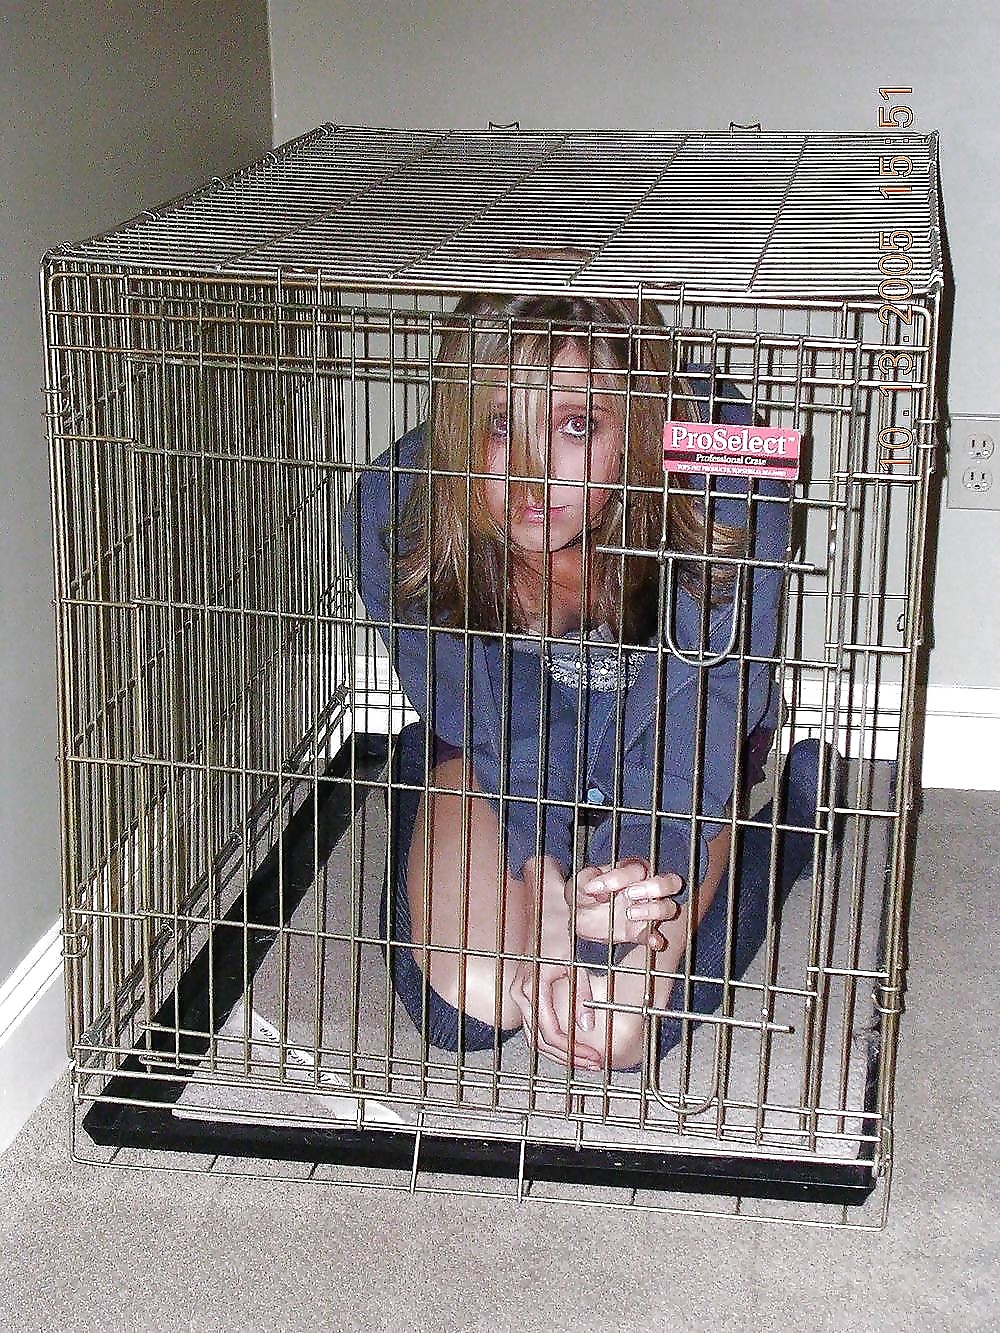 Sex cage slut image